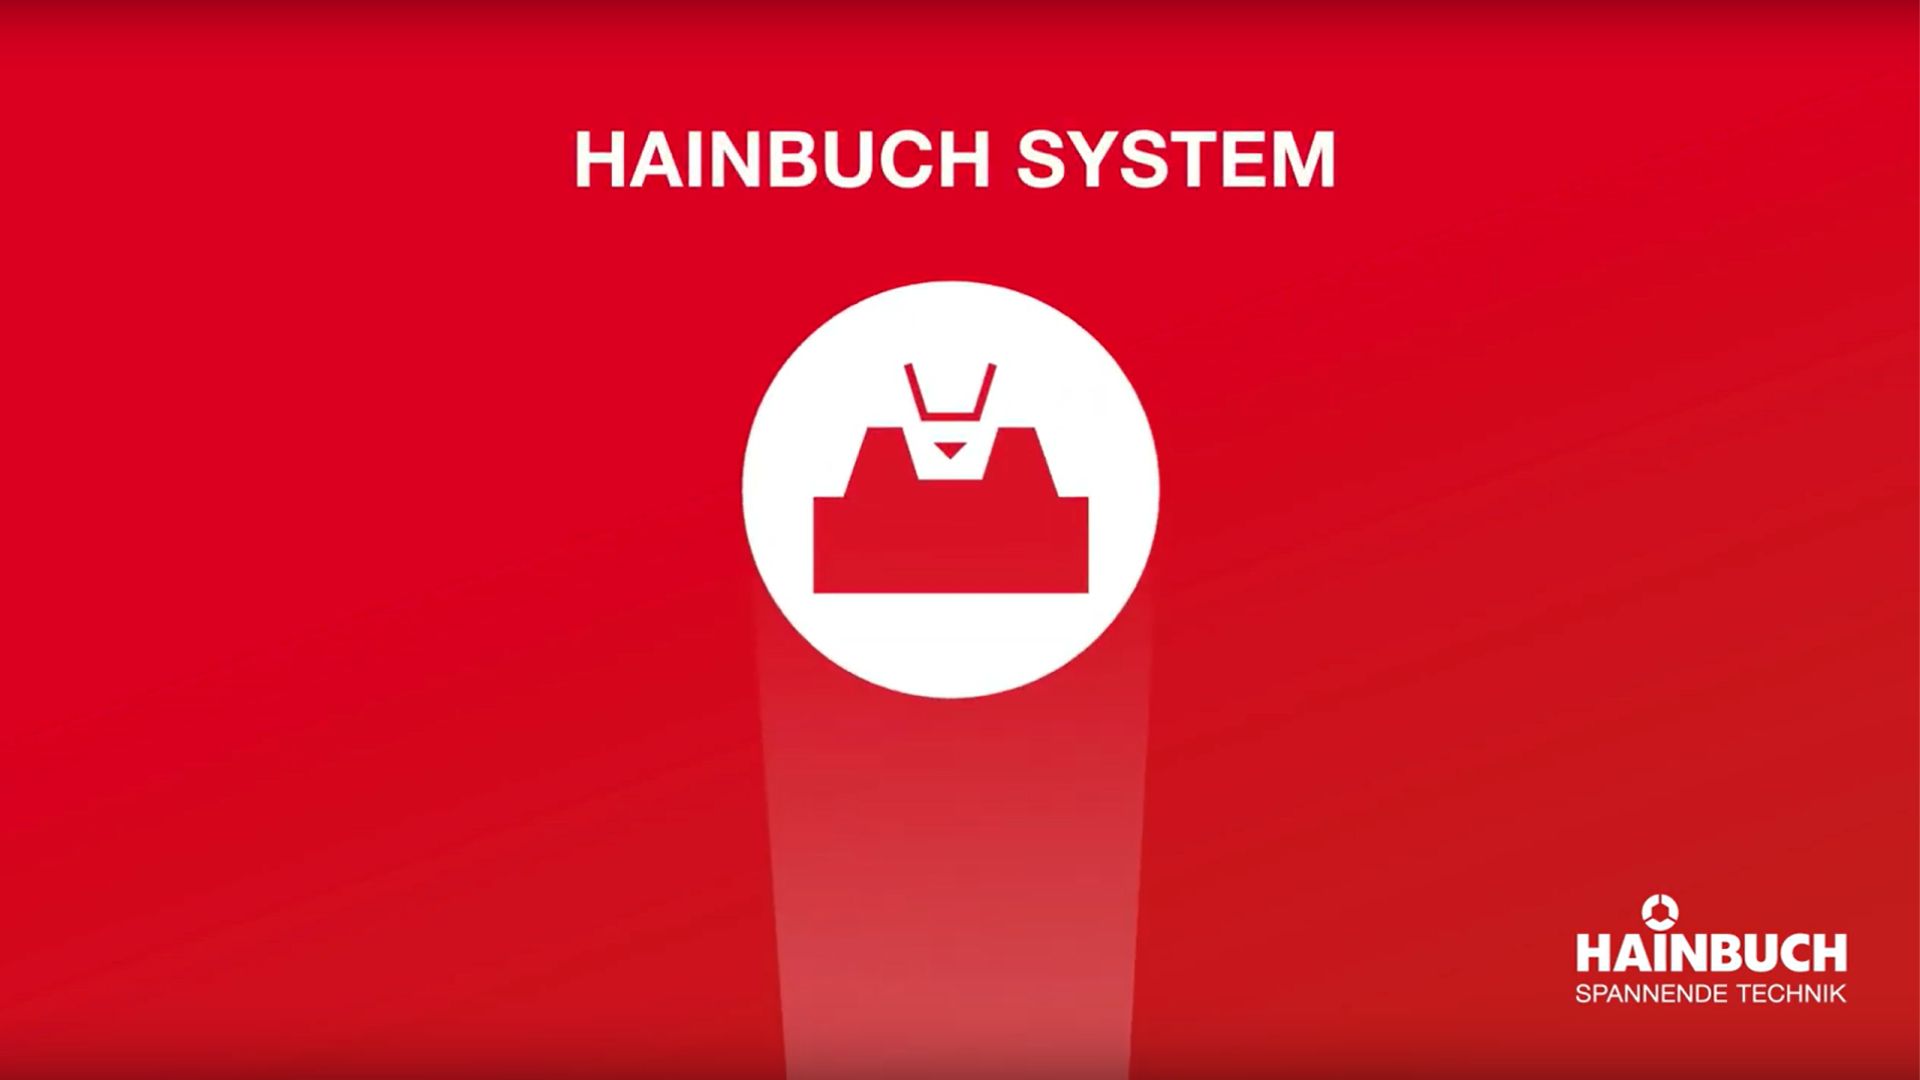 HAINBUCH SYSTEM